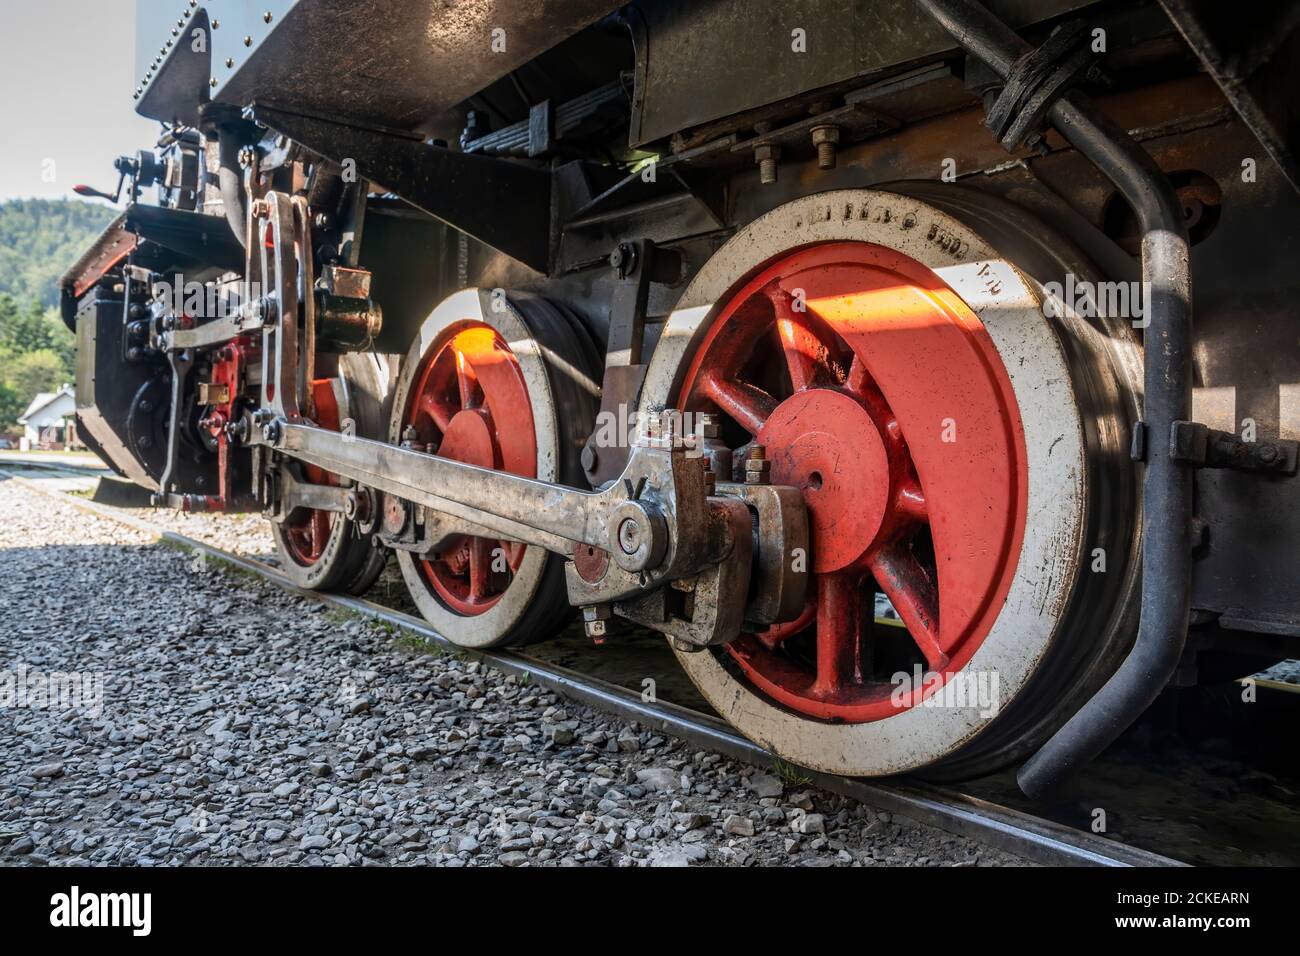 Bieszczady Forest Railway - locomotiva a vapore storica polacca a scartamento ridotto da 1956 Foto Stock